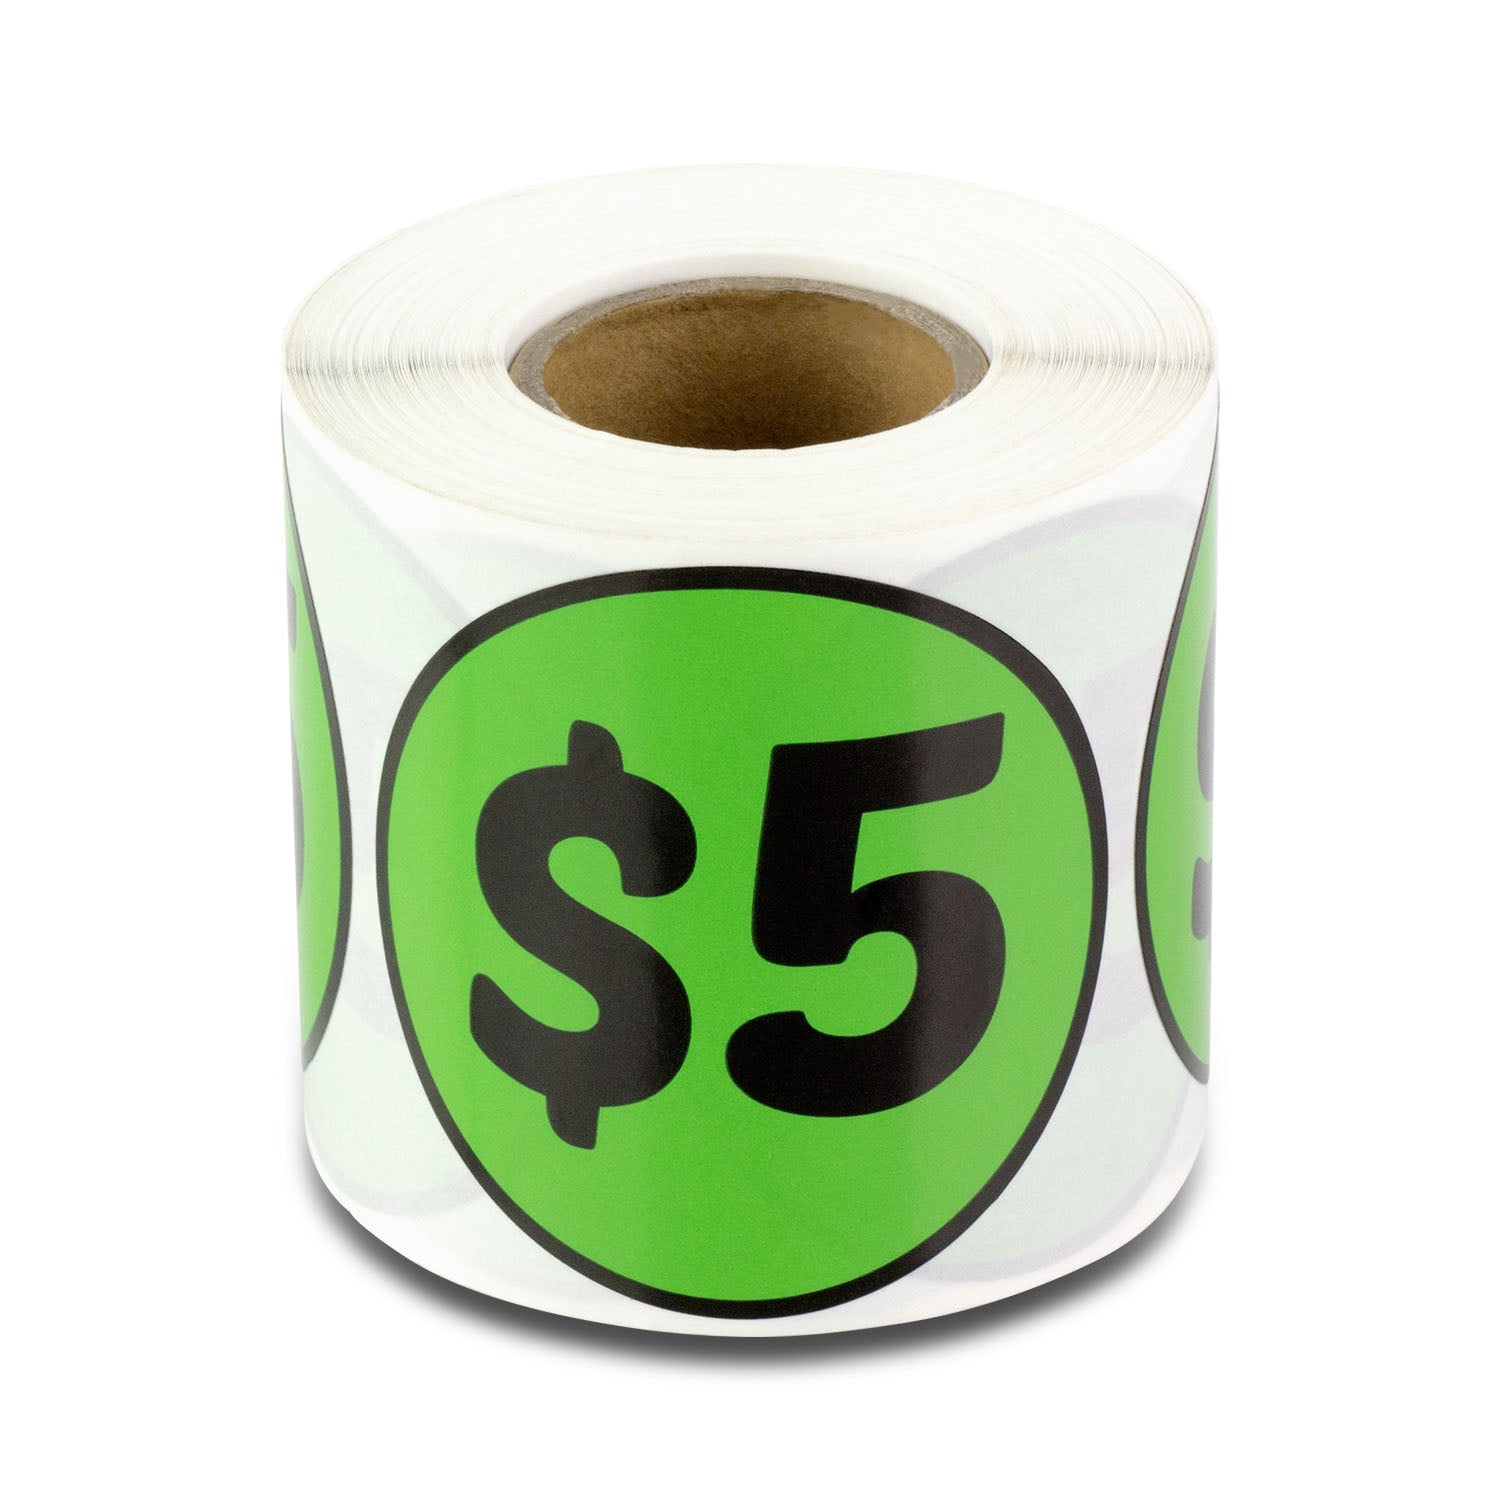 2 inch  Retail & Sales: 5 Dollar Stickers / $5 Dollar Price